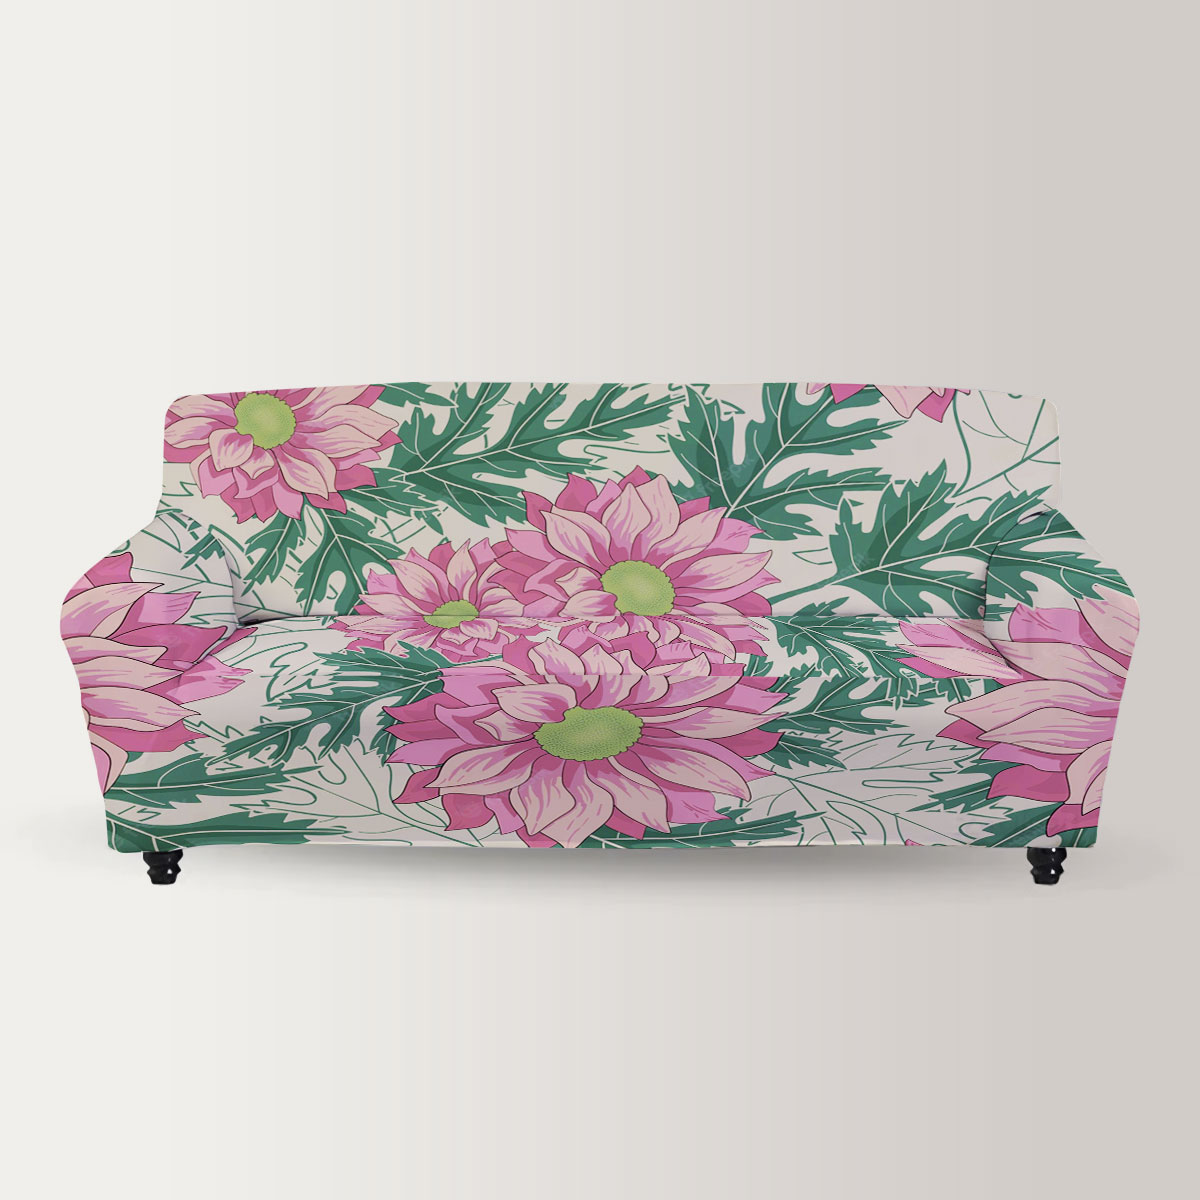 Vintage Chrysanthemum Flowers And Leaves Sofa Cover